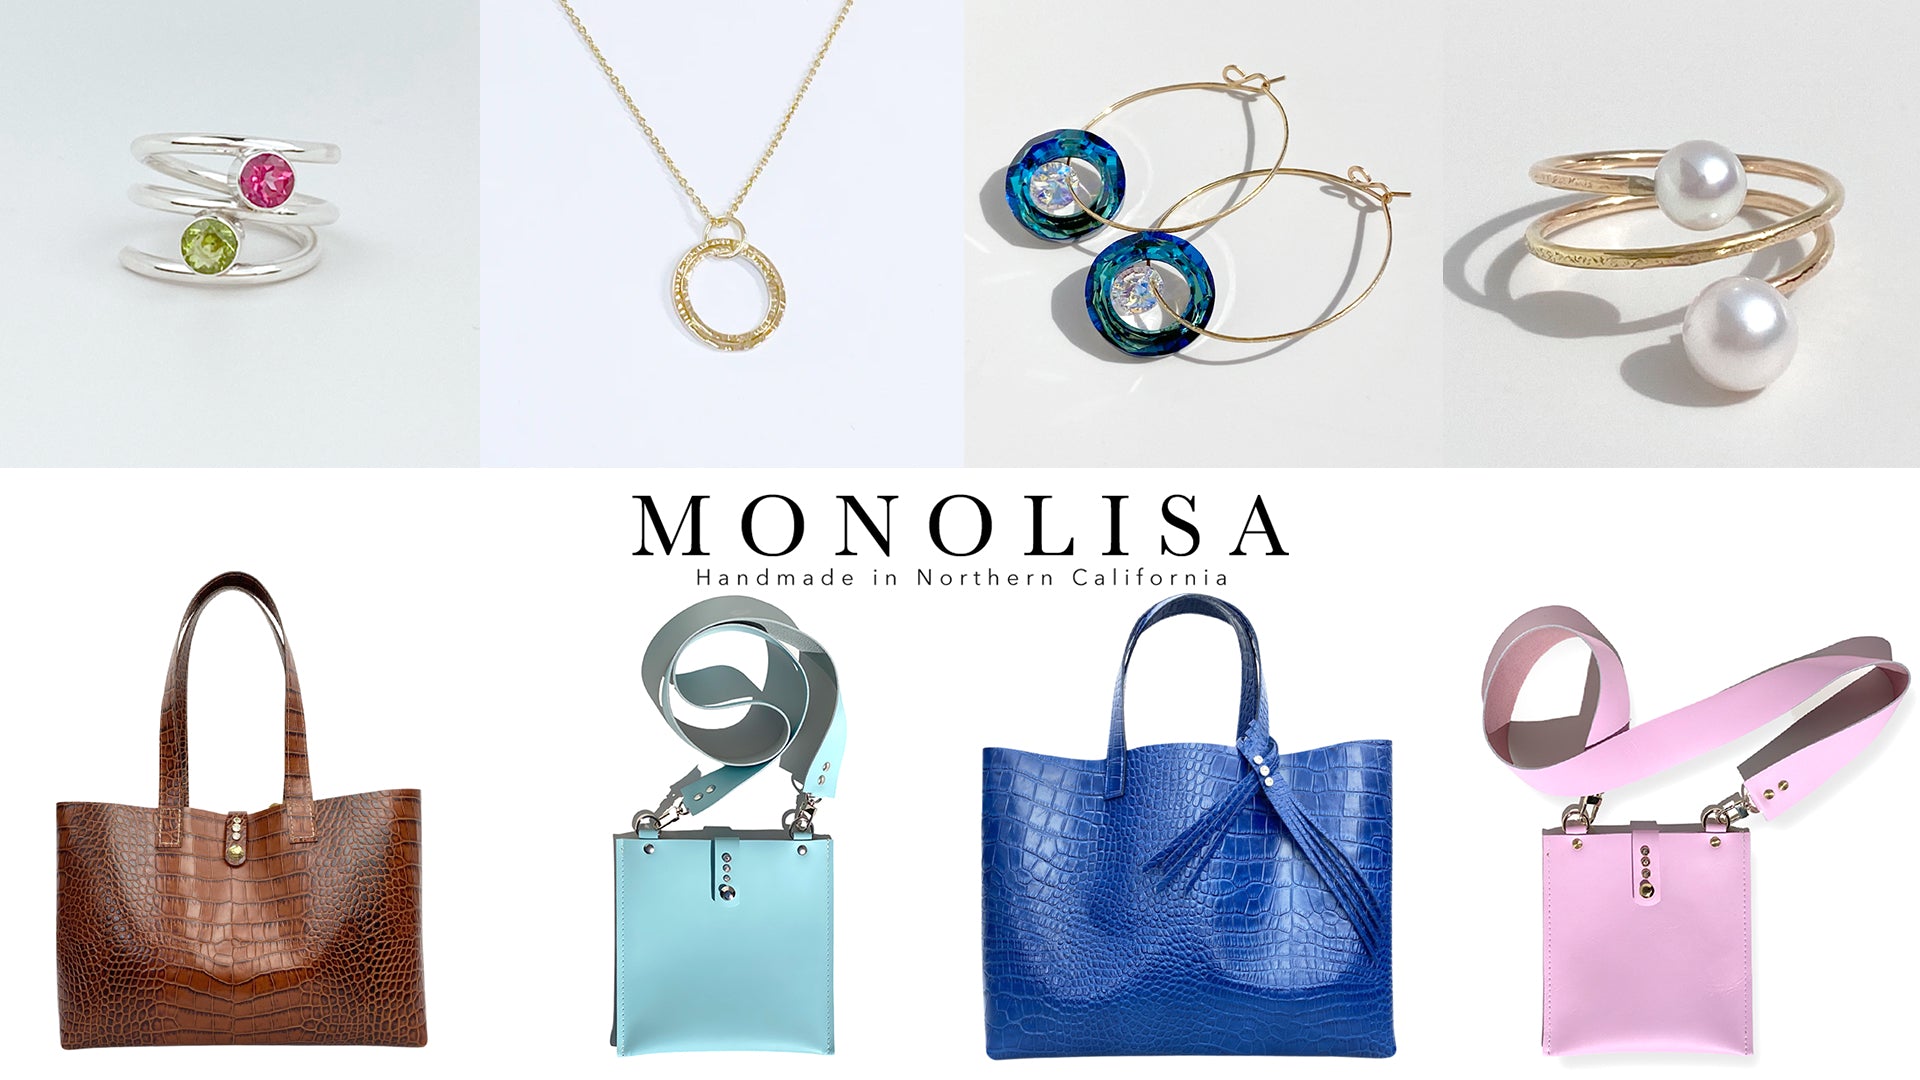 MONOLISA Handbag & Jewelry Collection - Made in California by Artist Lisa Ramos